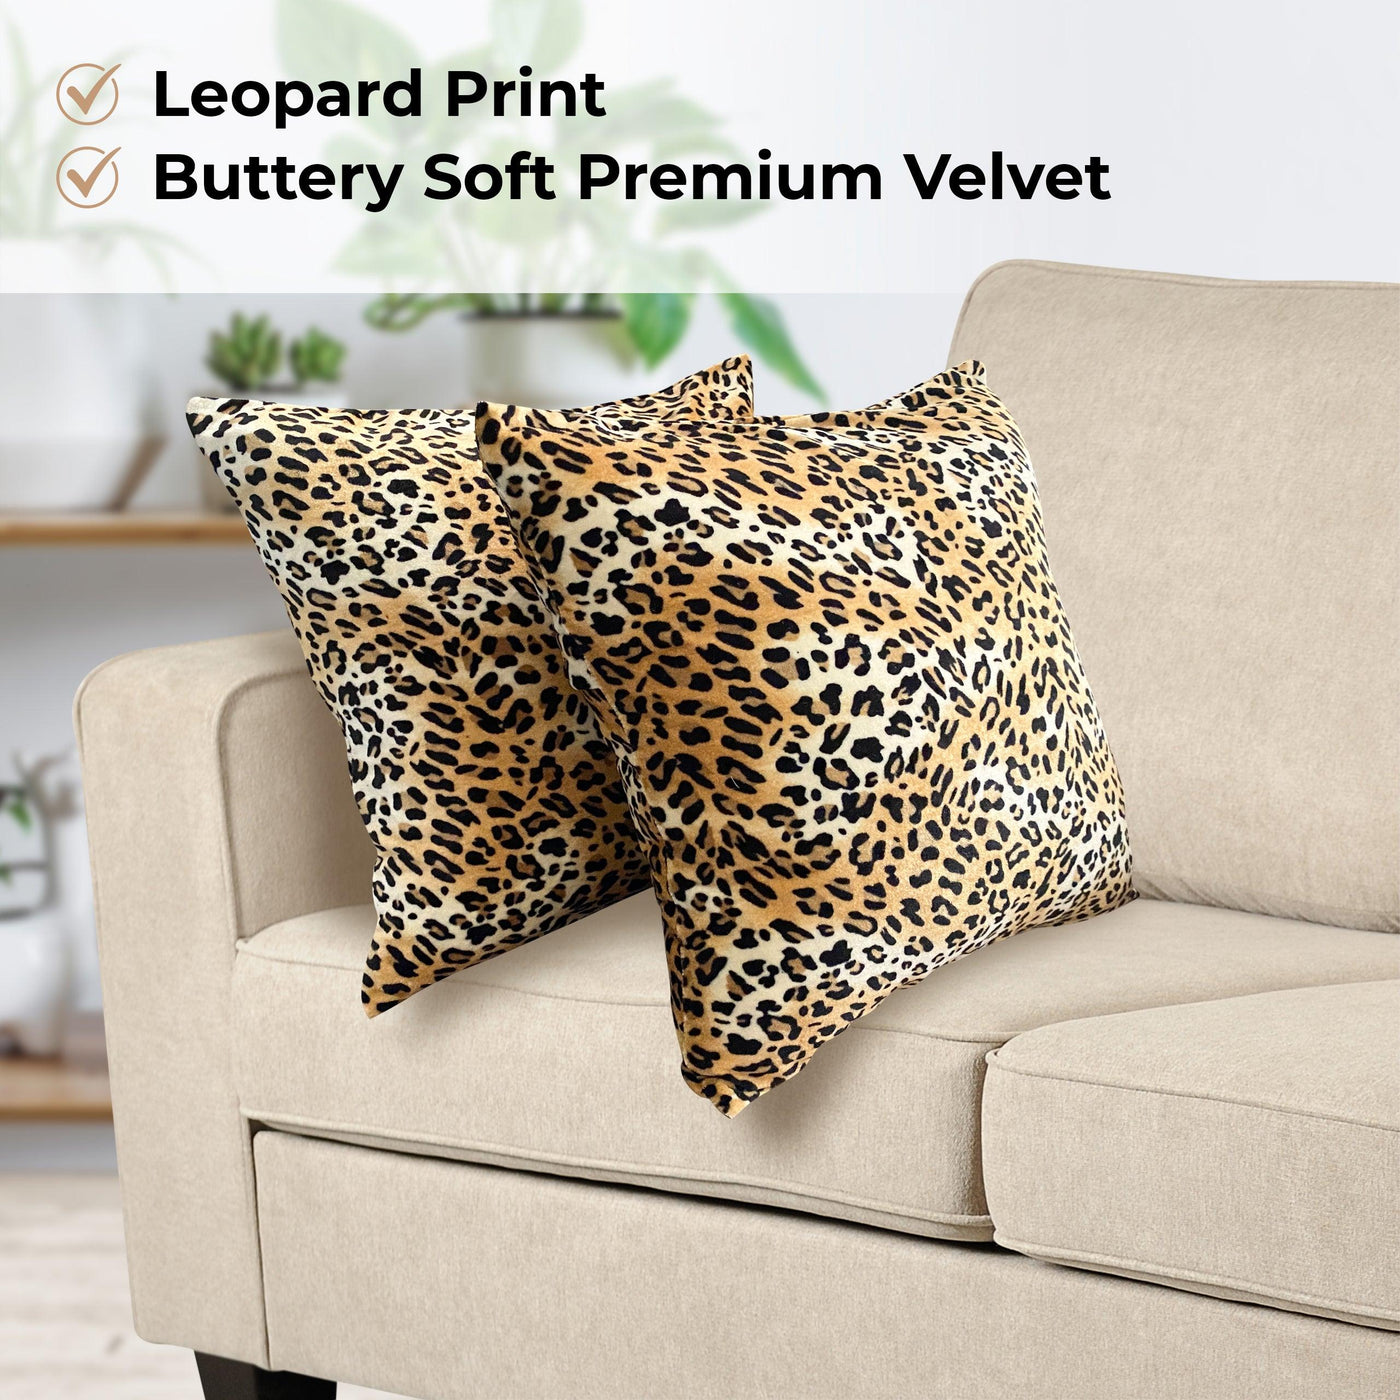 Buttery soft premium velvet Leopard print cushion cover for Sofa cusions